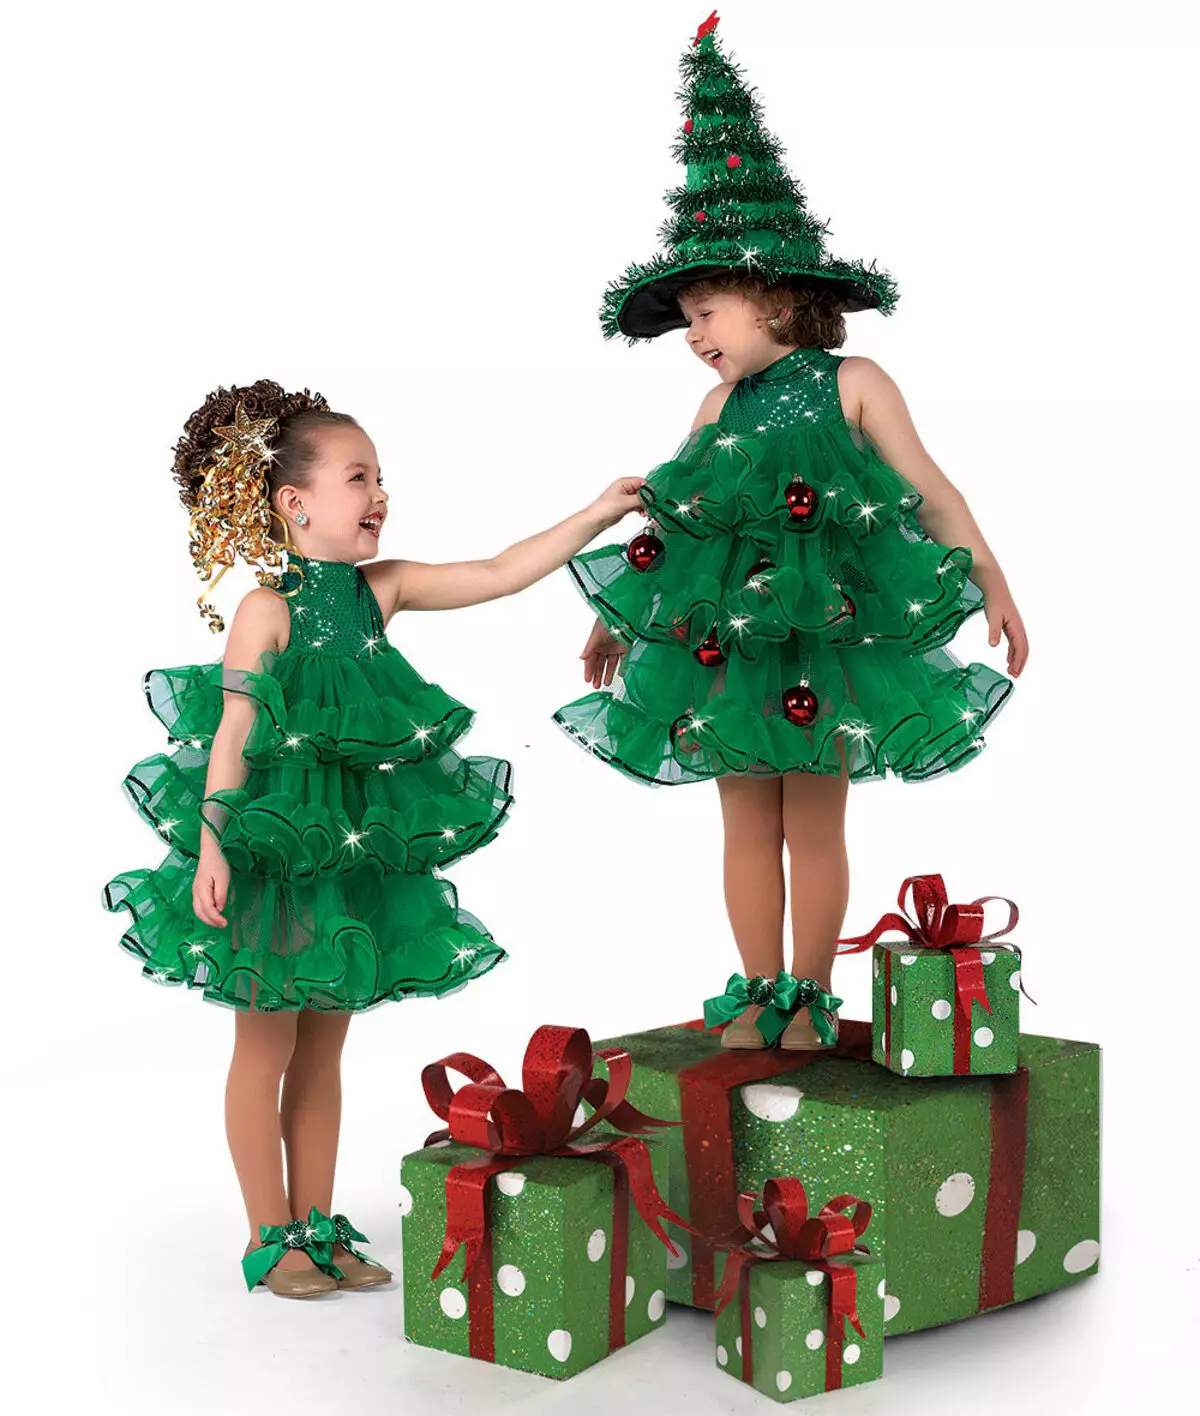 Новогодний костюм новый год. Костюм ёлочки для девочки. Платье елка для девочки. Новогодний костюм елочка для девочки. Новогоднее платье елочка для девочки.